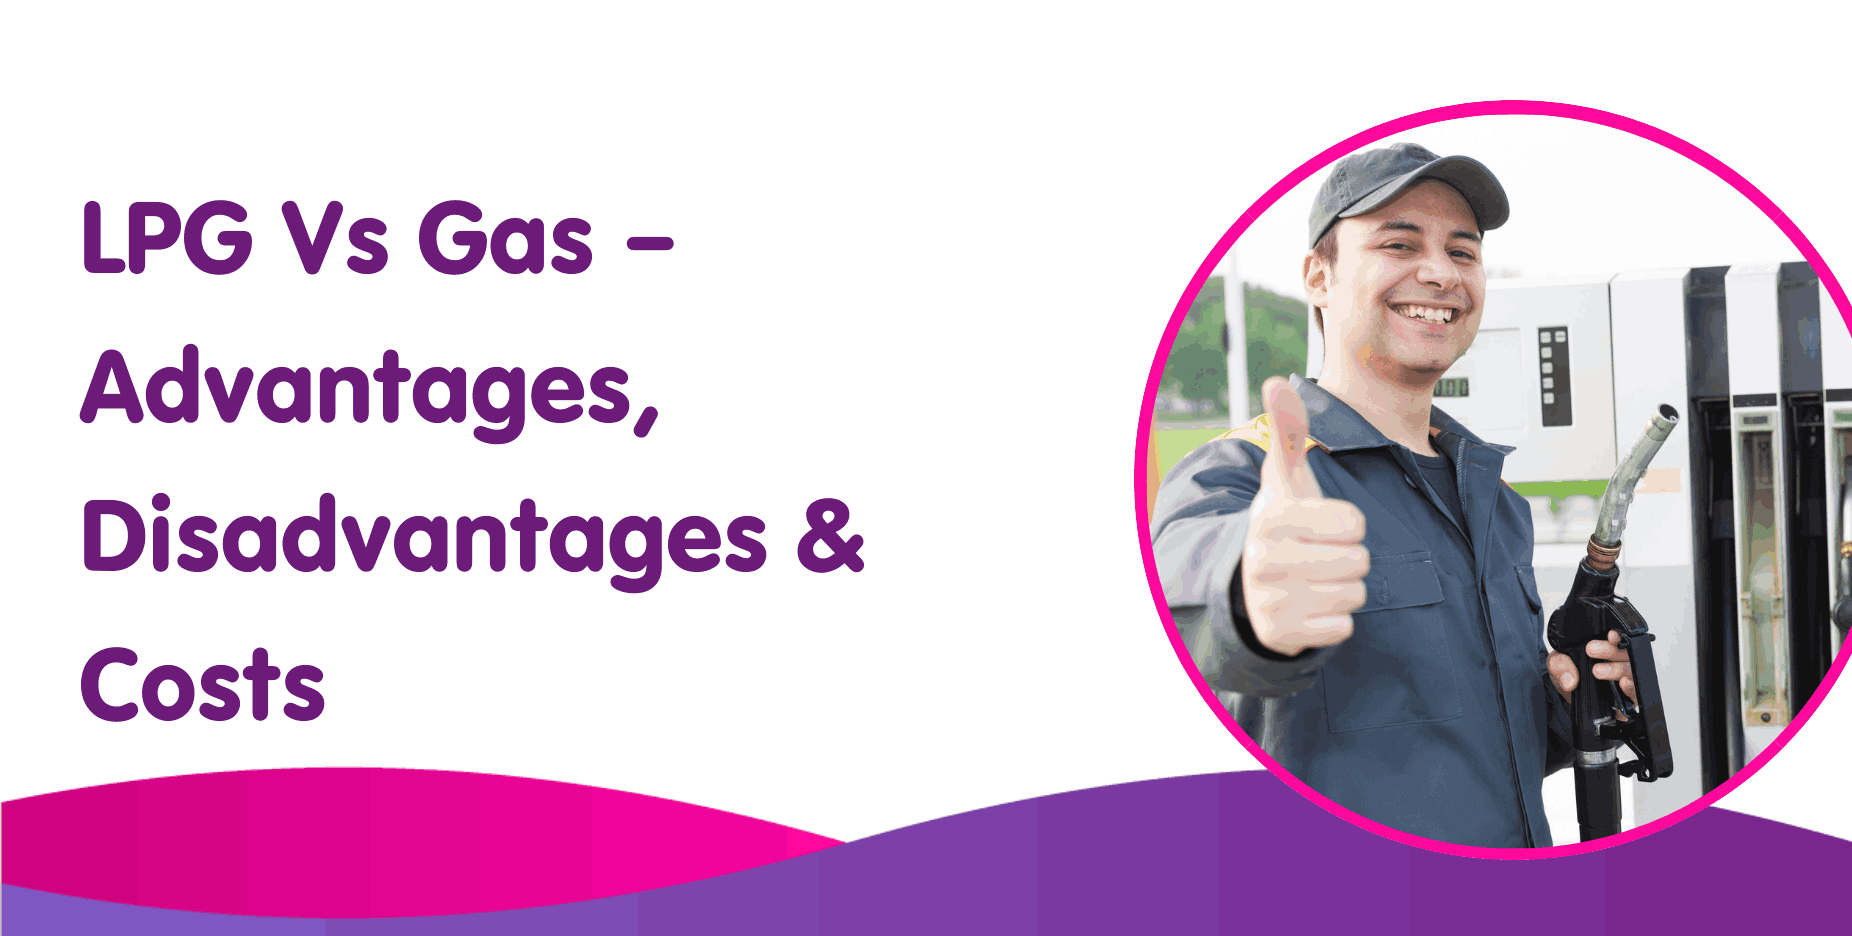 LPG Vs Gas - Advantages, Disadvantages & Costs